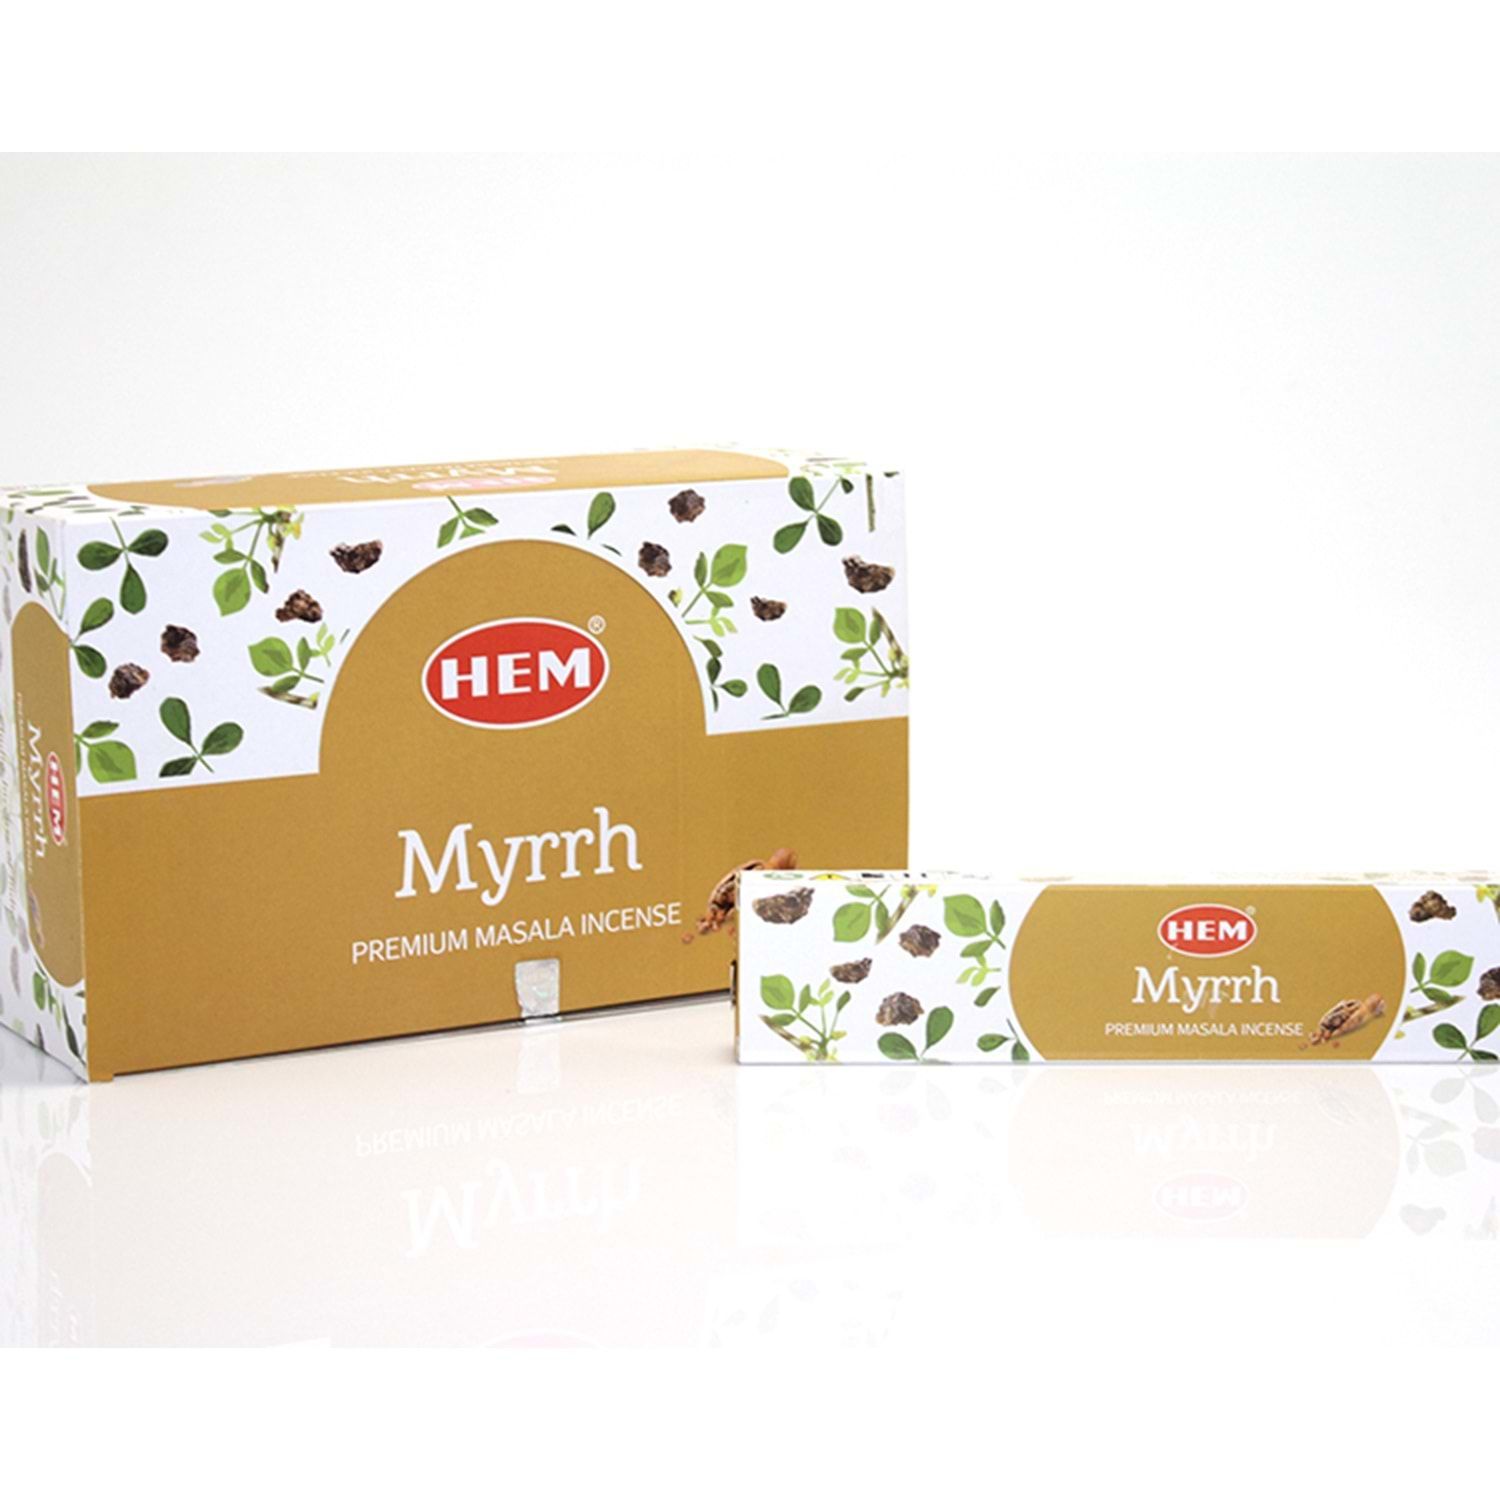 Hem Myrrh Masala Nature Masala Premium Çubuk Tütsü (12 x 15gr)